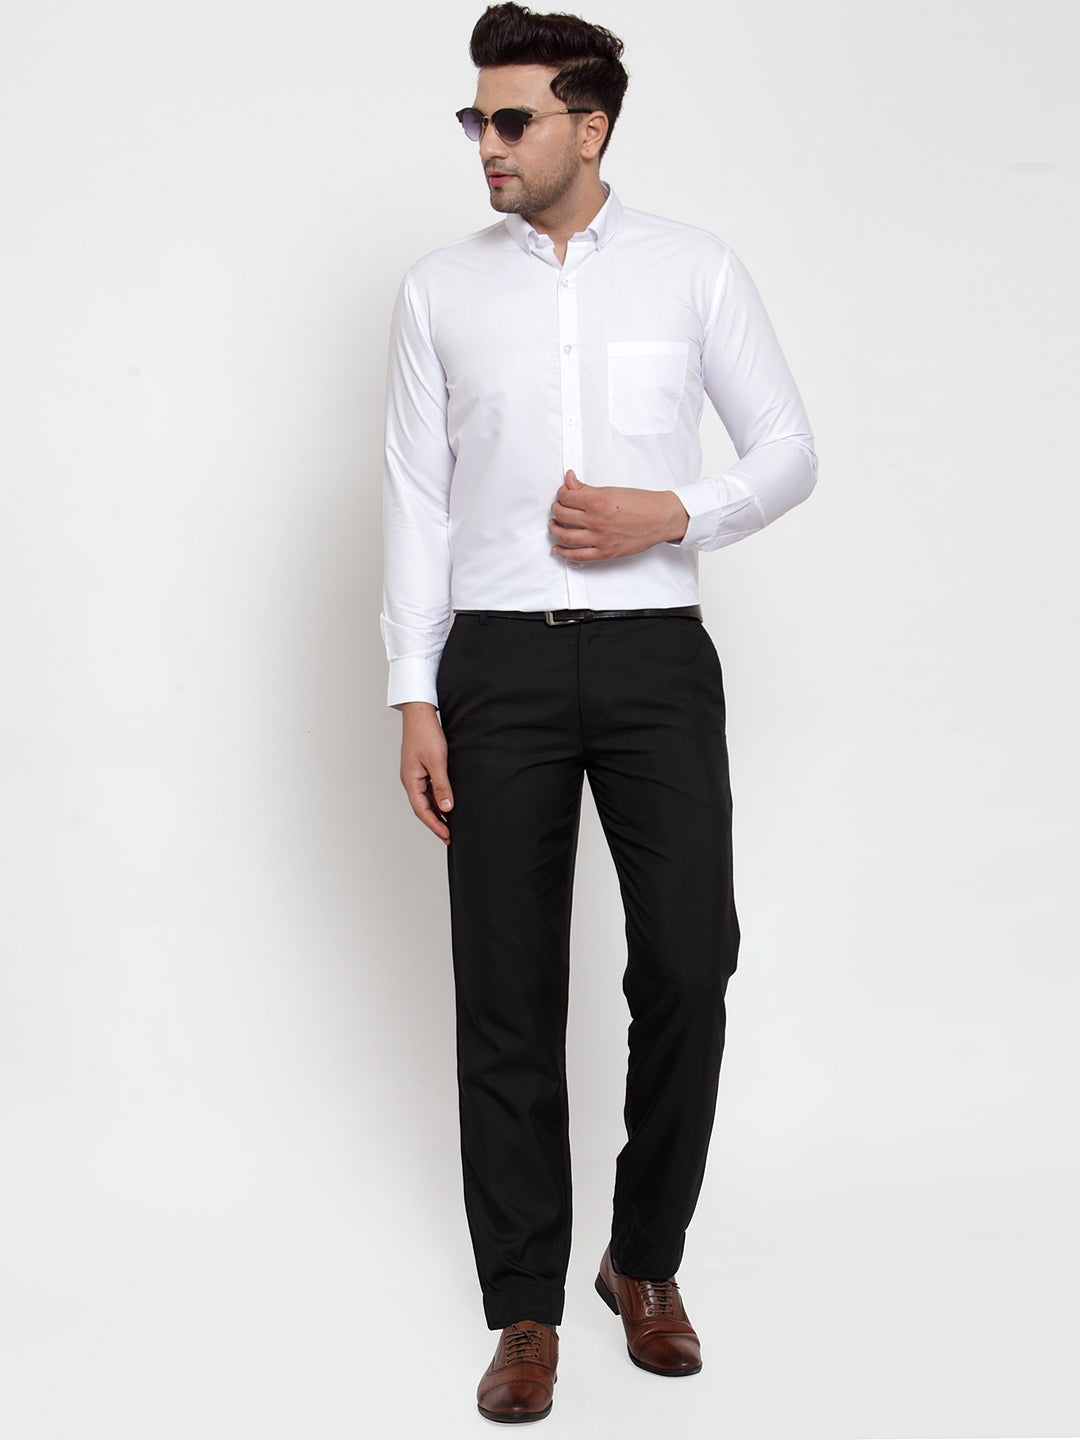 Men's White Cotton Solid Button Down Formal Shirts ( SF 713White ) - Jainish